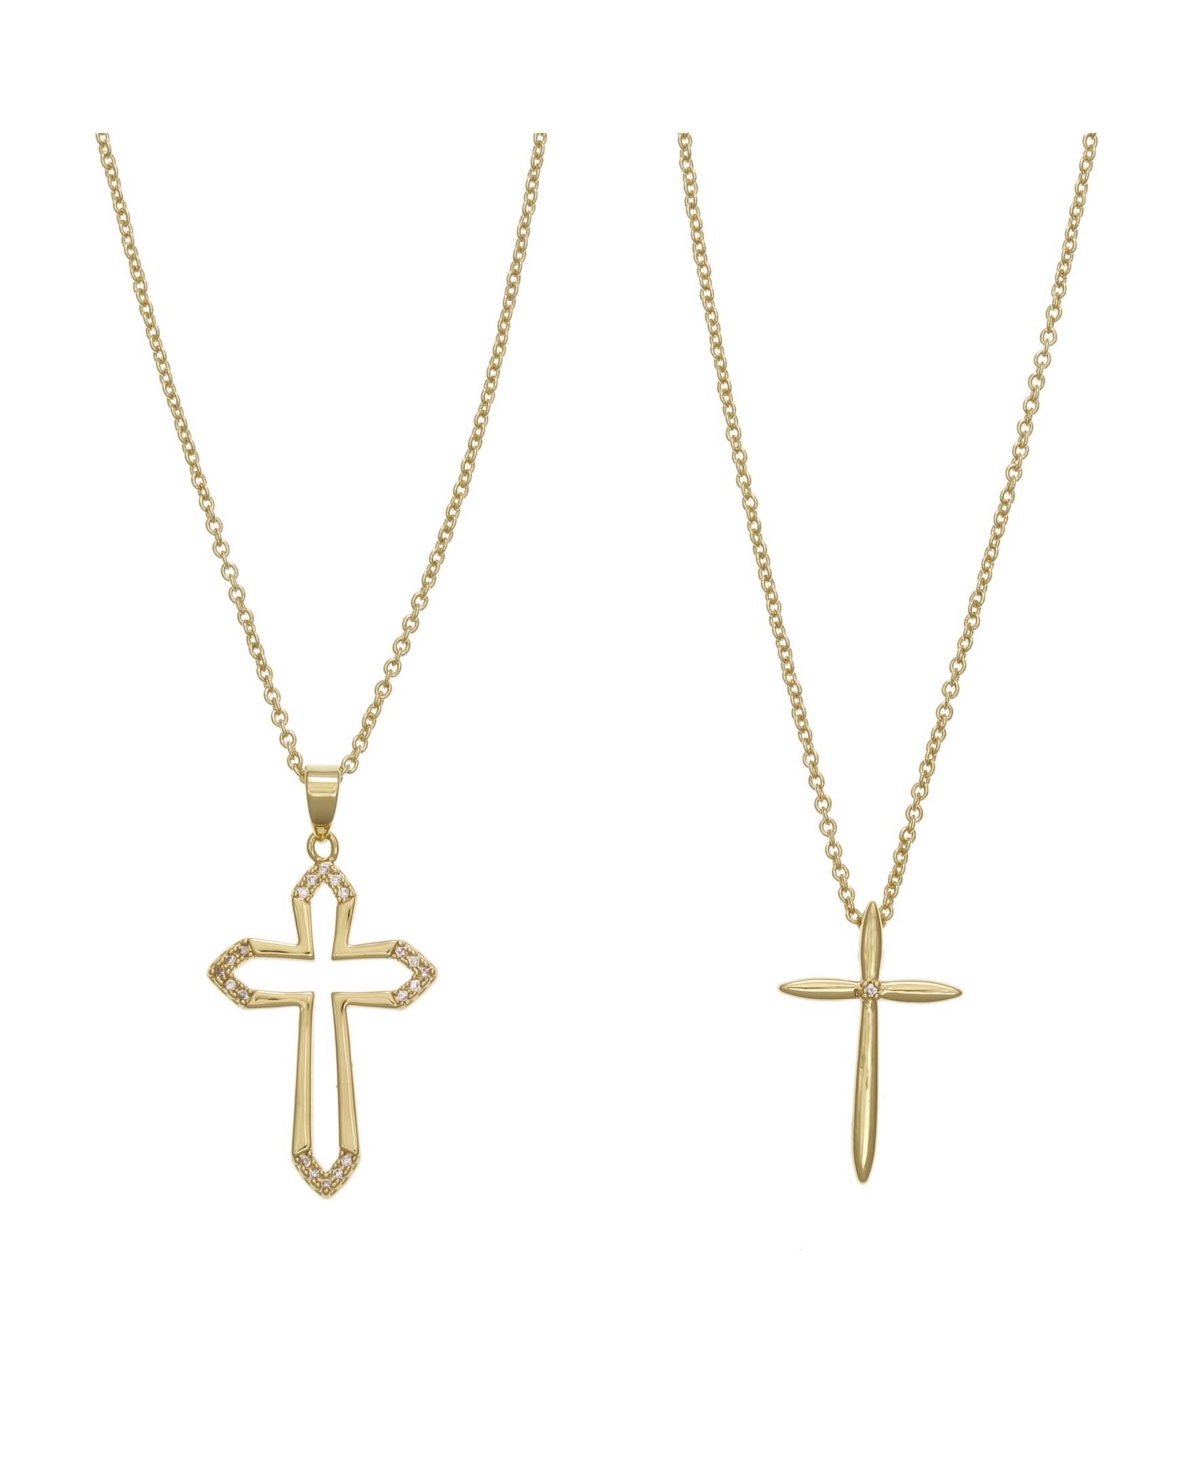 Fao Schwarz Women's Cross Pendant with Crystal Stones Necklace Set, 2 Piece